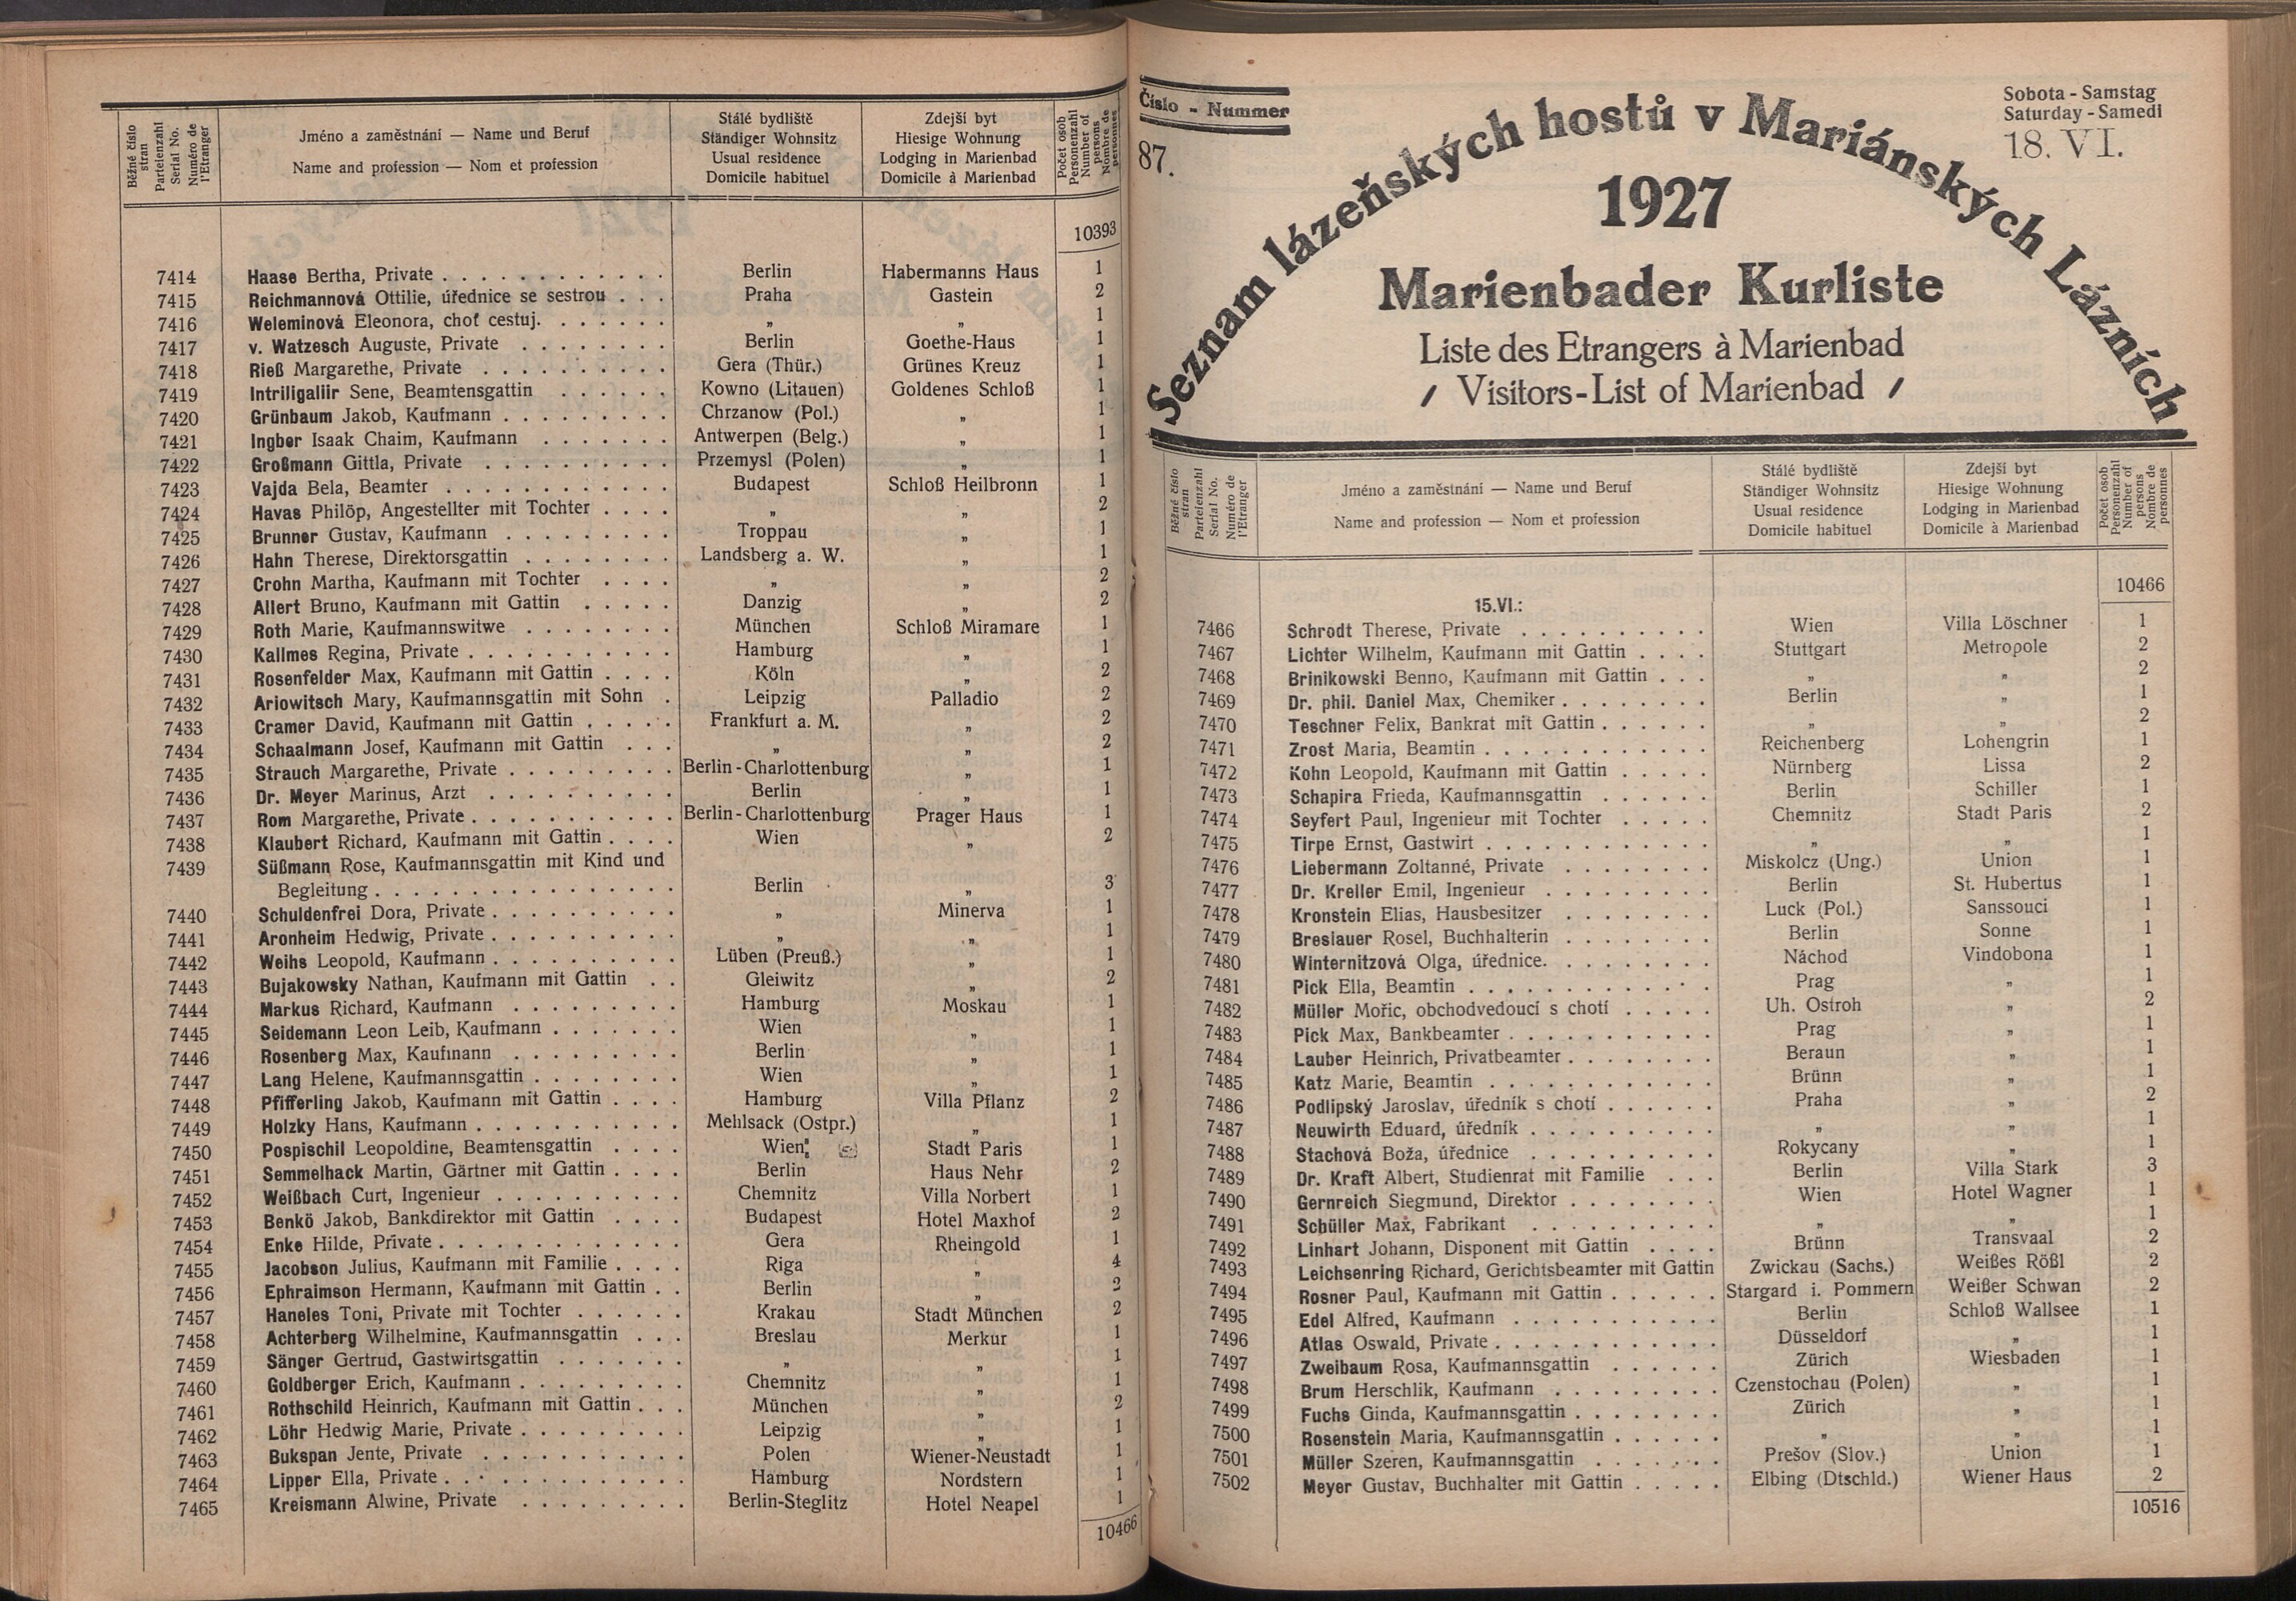 166. soap-ch_knihovna_marienbader-kurliste-1927_1660